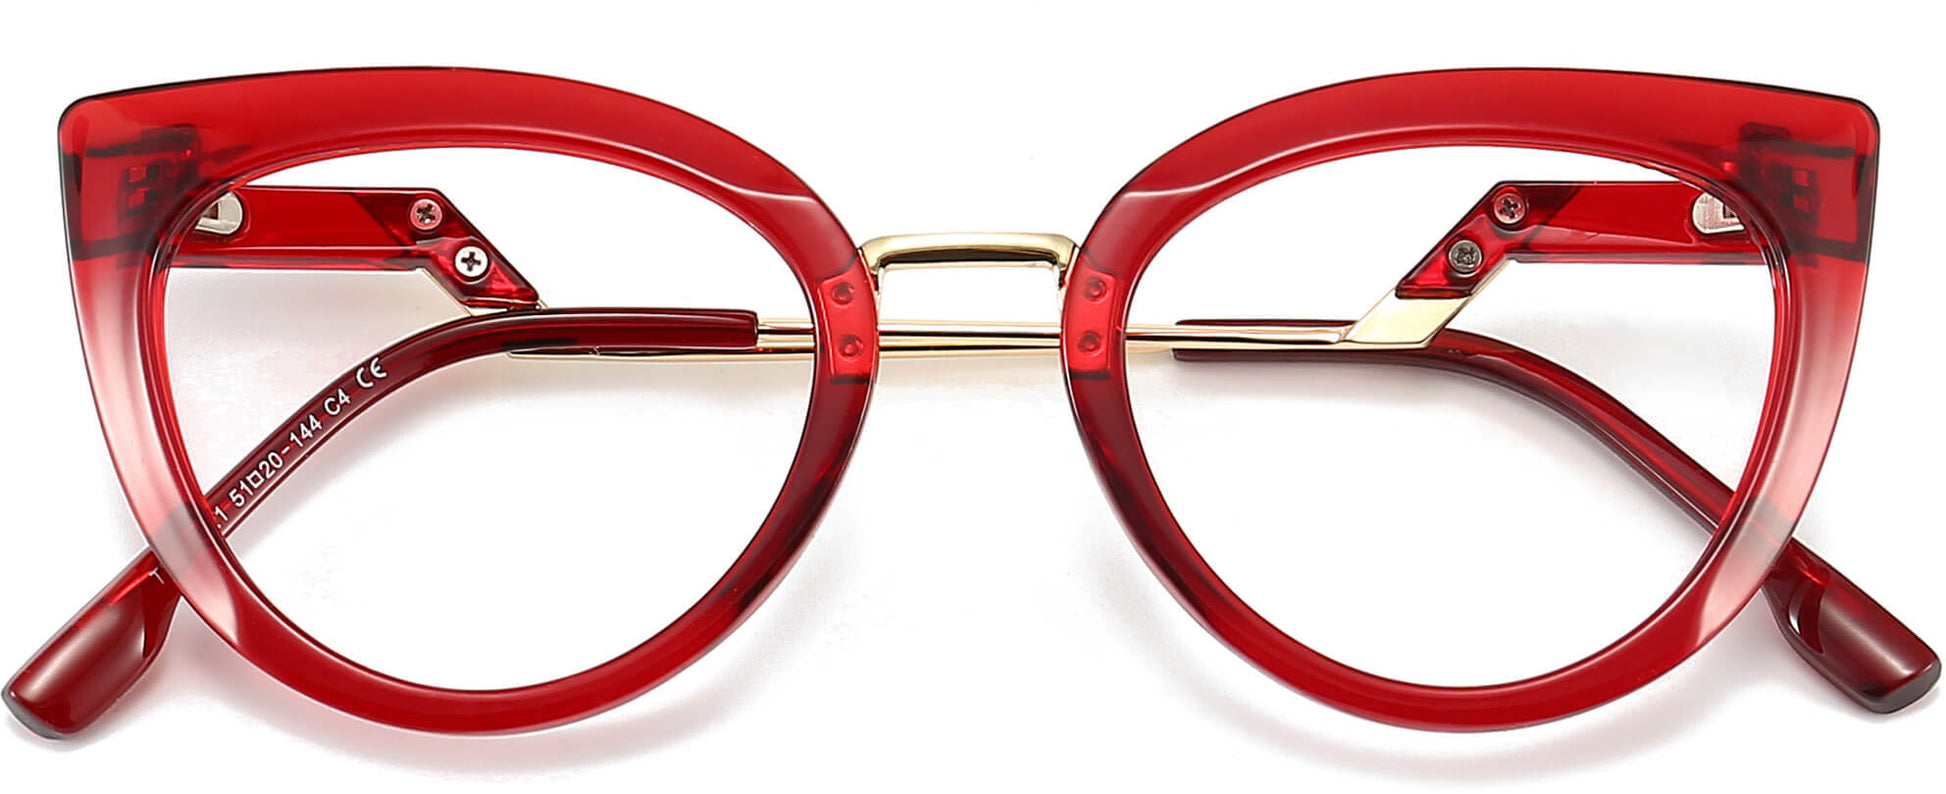 Matilda Cateye Red Eyeglasses from ANRRI, closed view